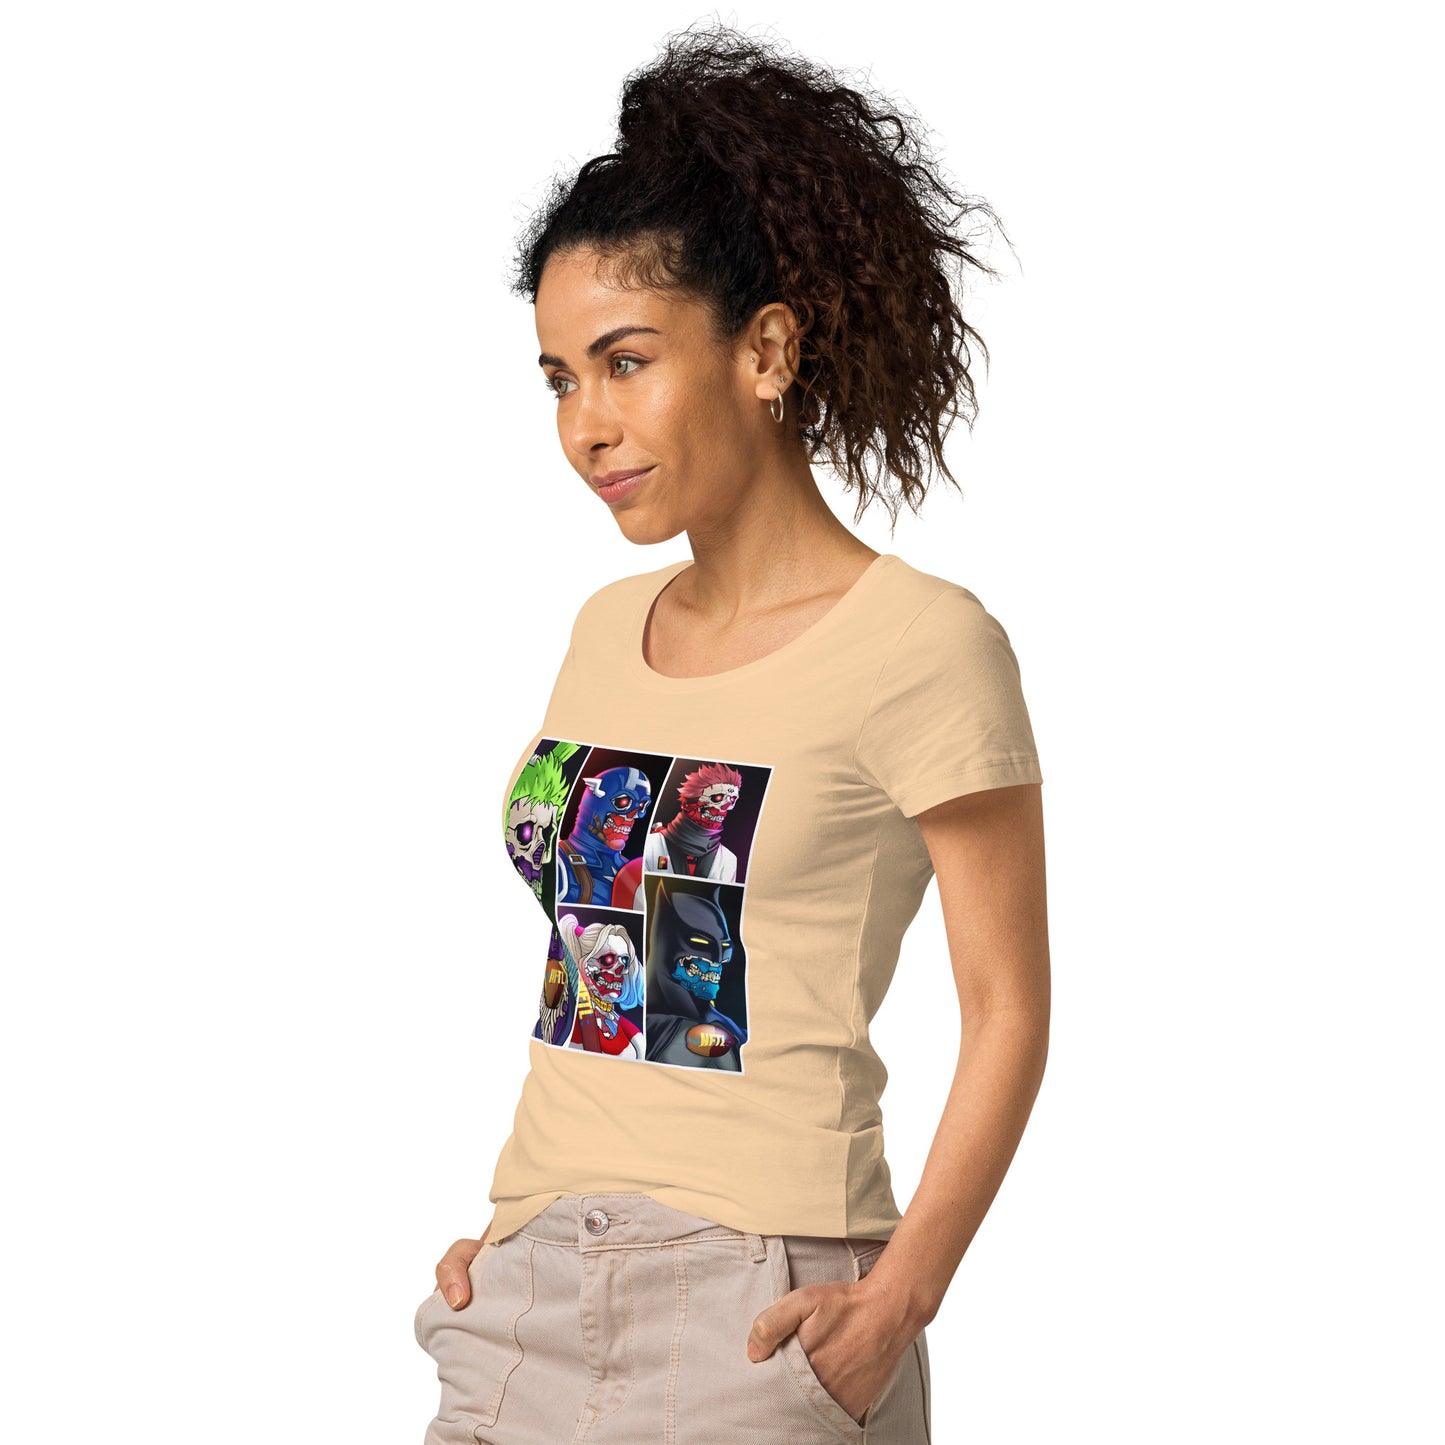 Women’s organic t-shirt $NFTL Limited Edition #1